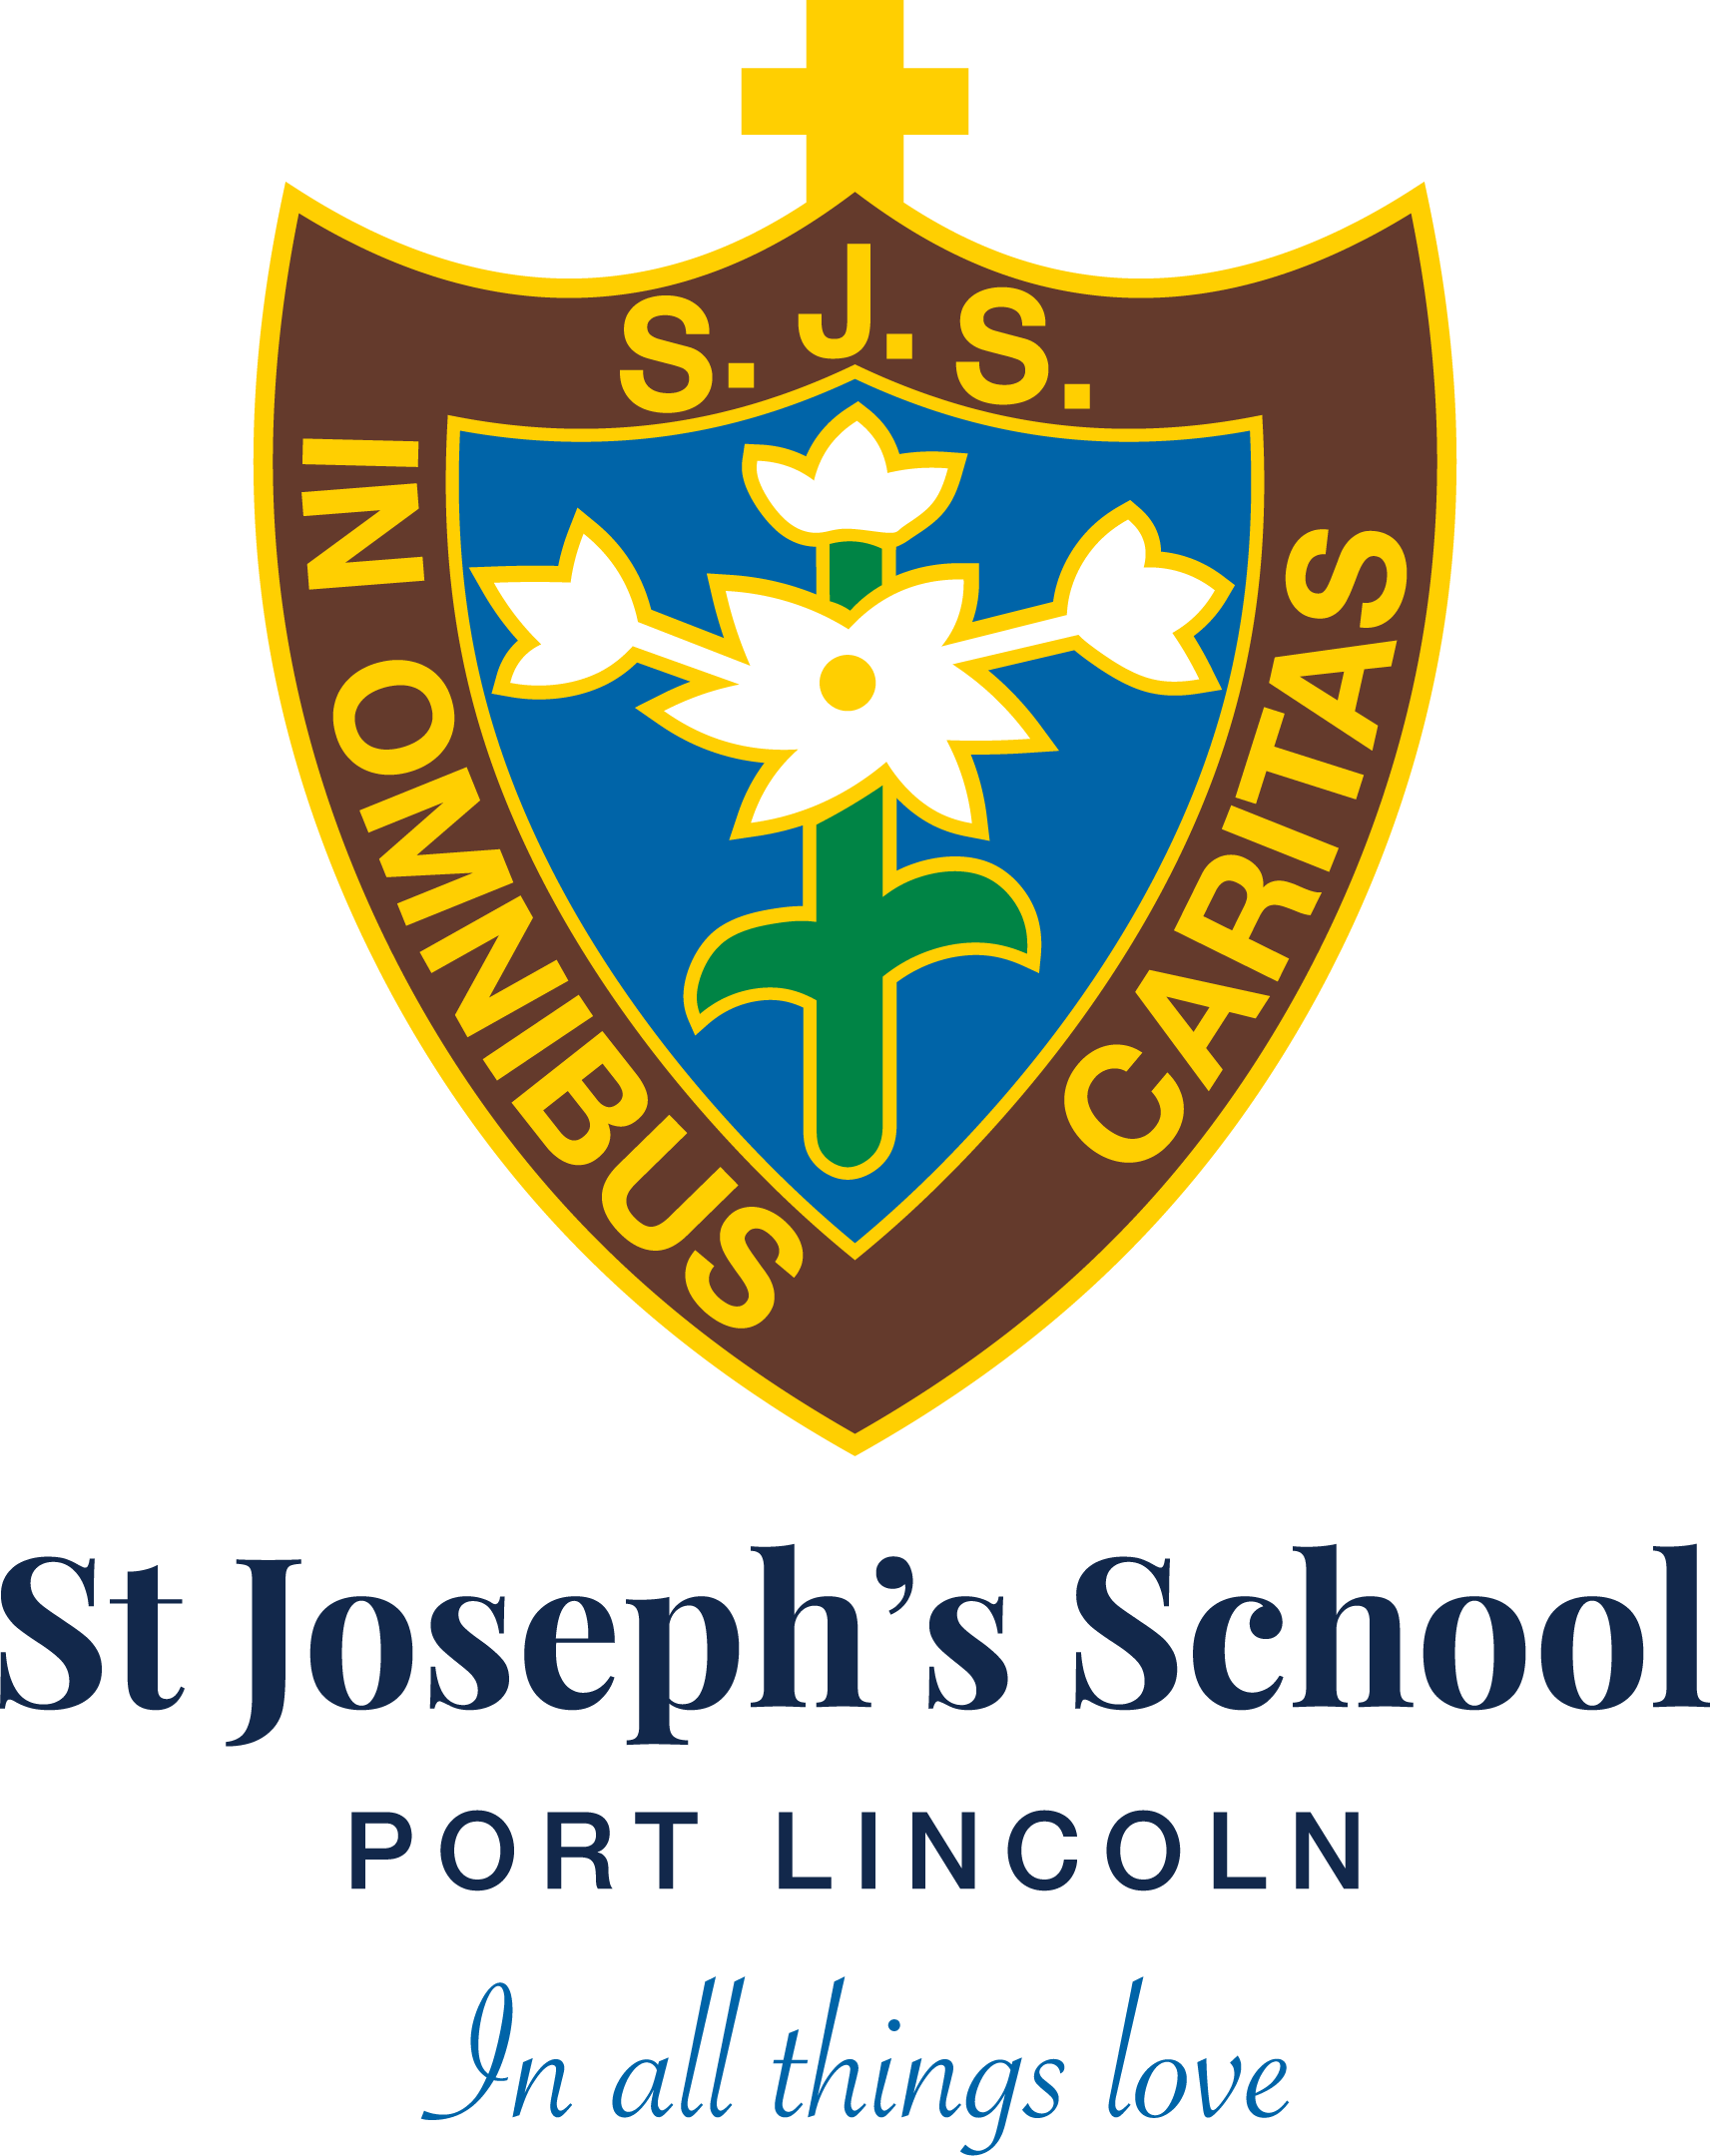 St Joseph's School, Port Lincoln